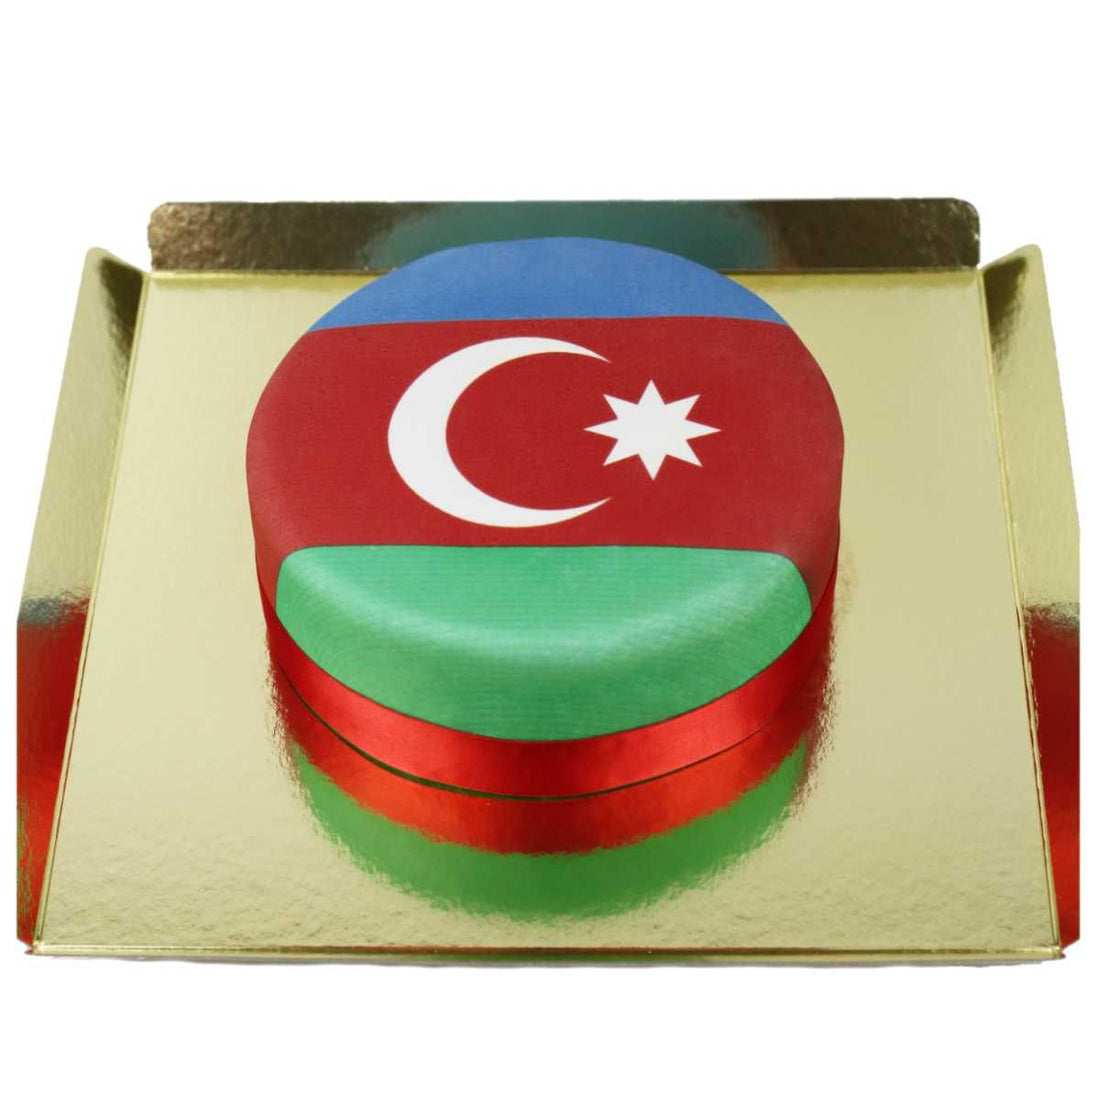 Azerbaycan Bayrağı Kutlama Pastası